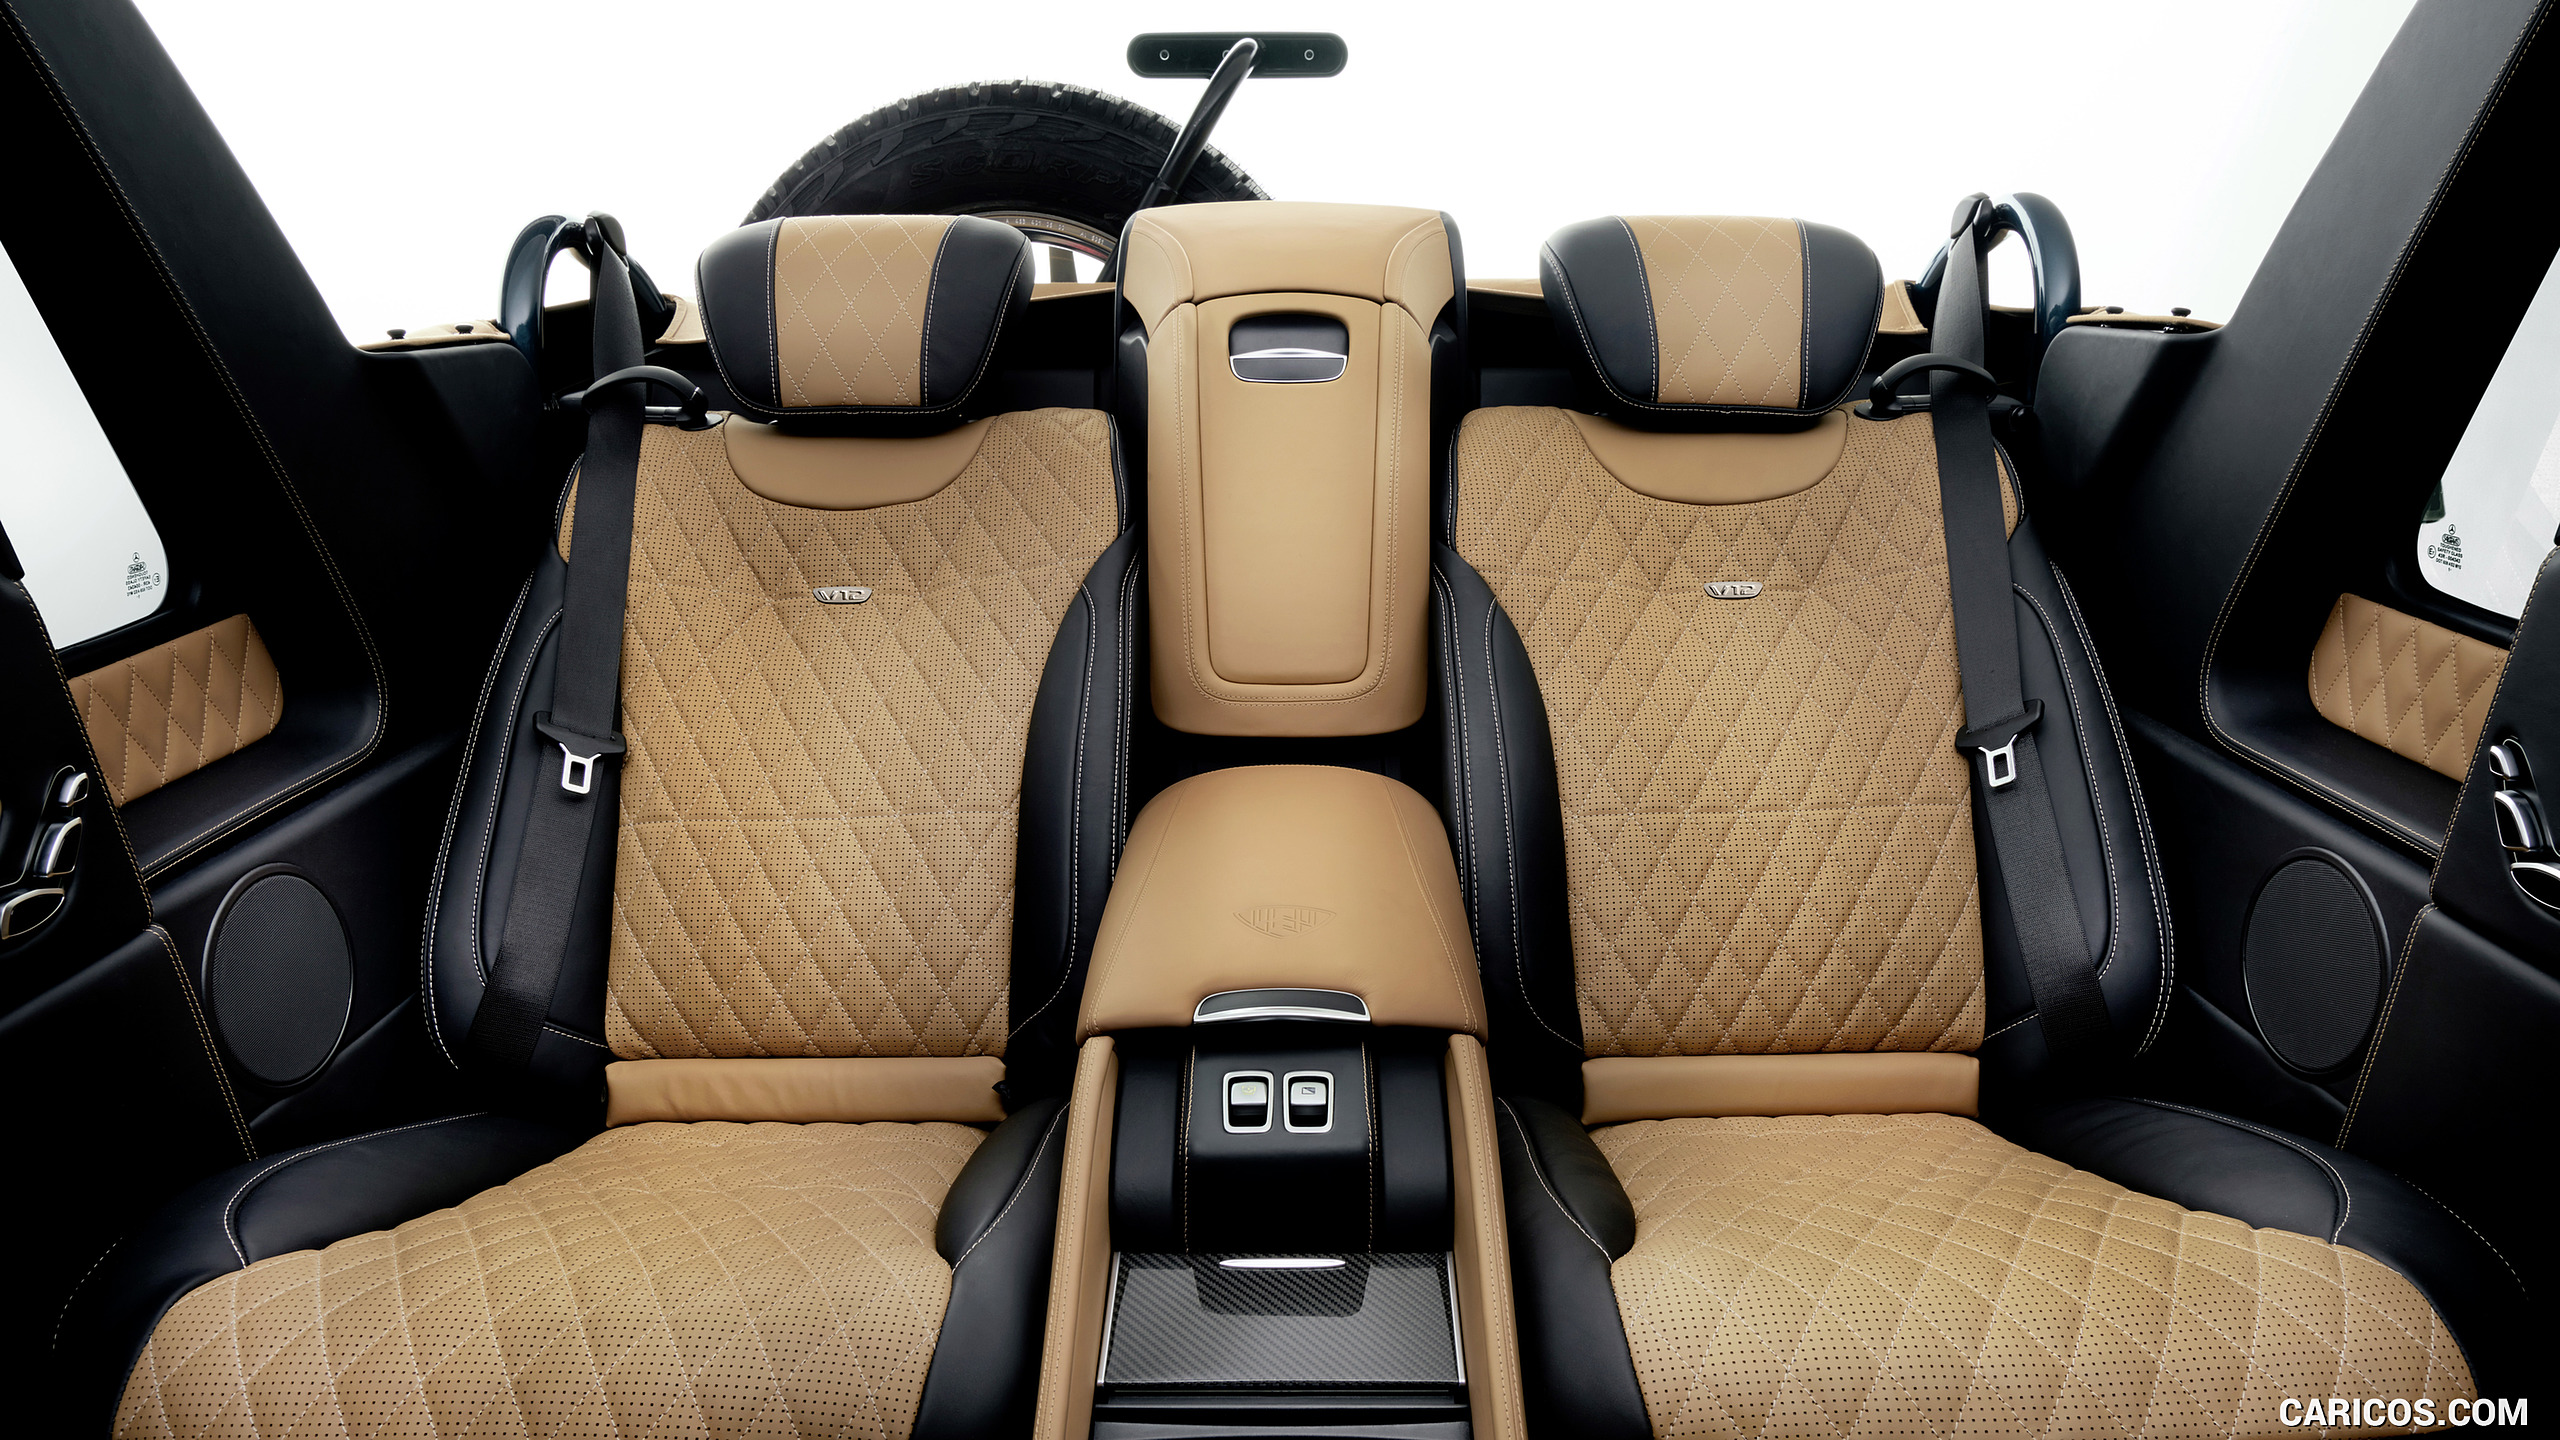 2018 Mercedes-Maybach G 650 Landaulet - Interior, Rear Seats, #53 of 59